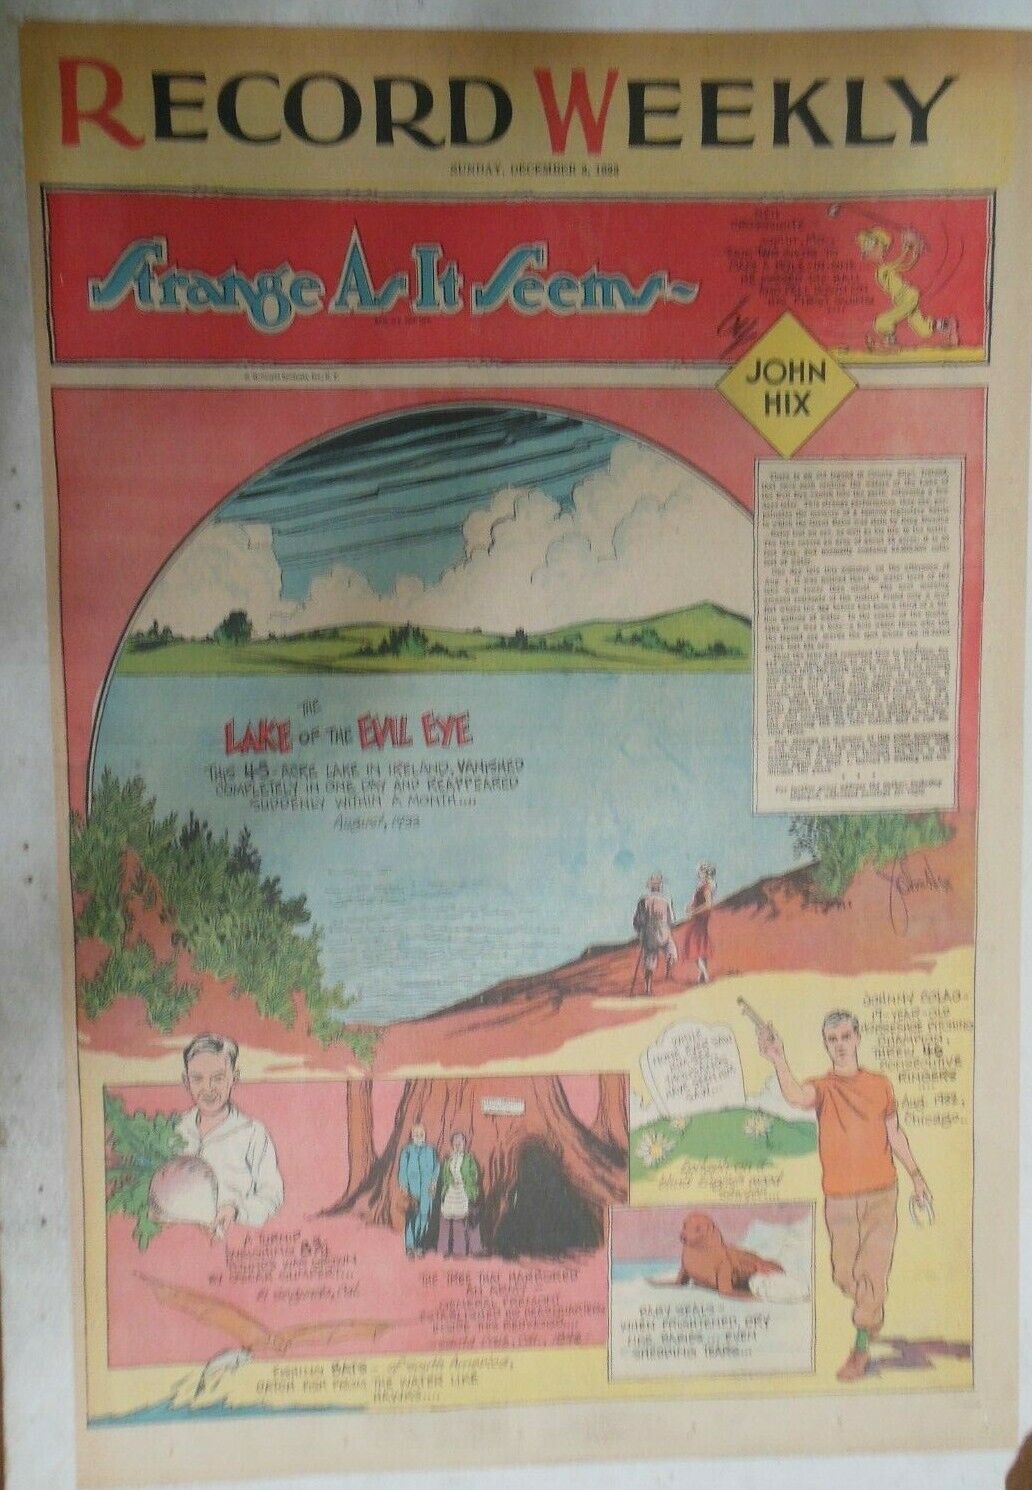 Strange As It Seems: Irish Evil Eye Lake, Record Turnip by Hix from 12/3/1933